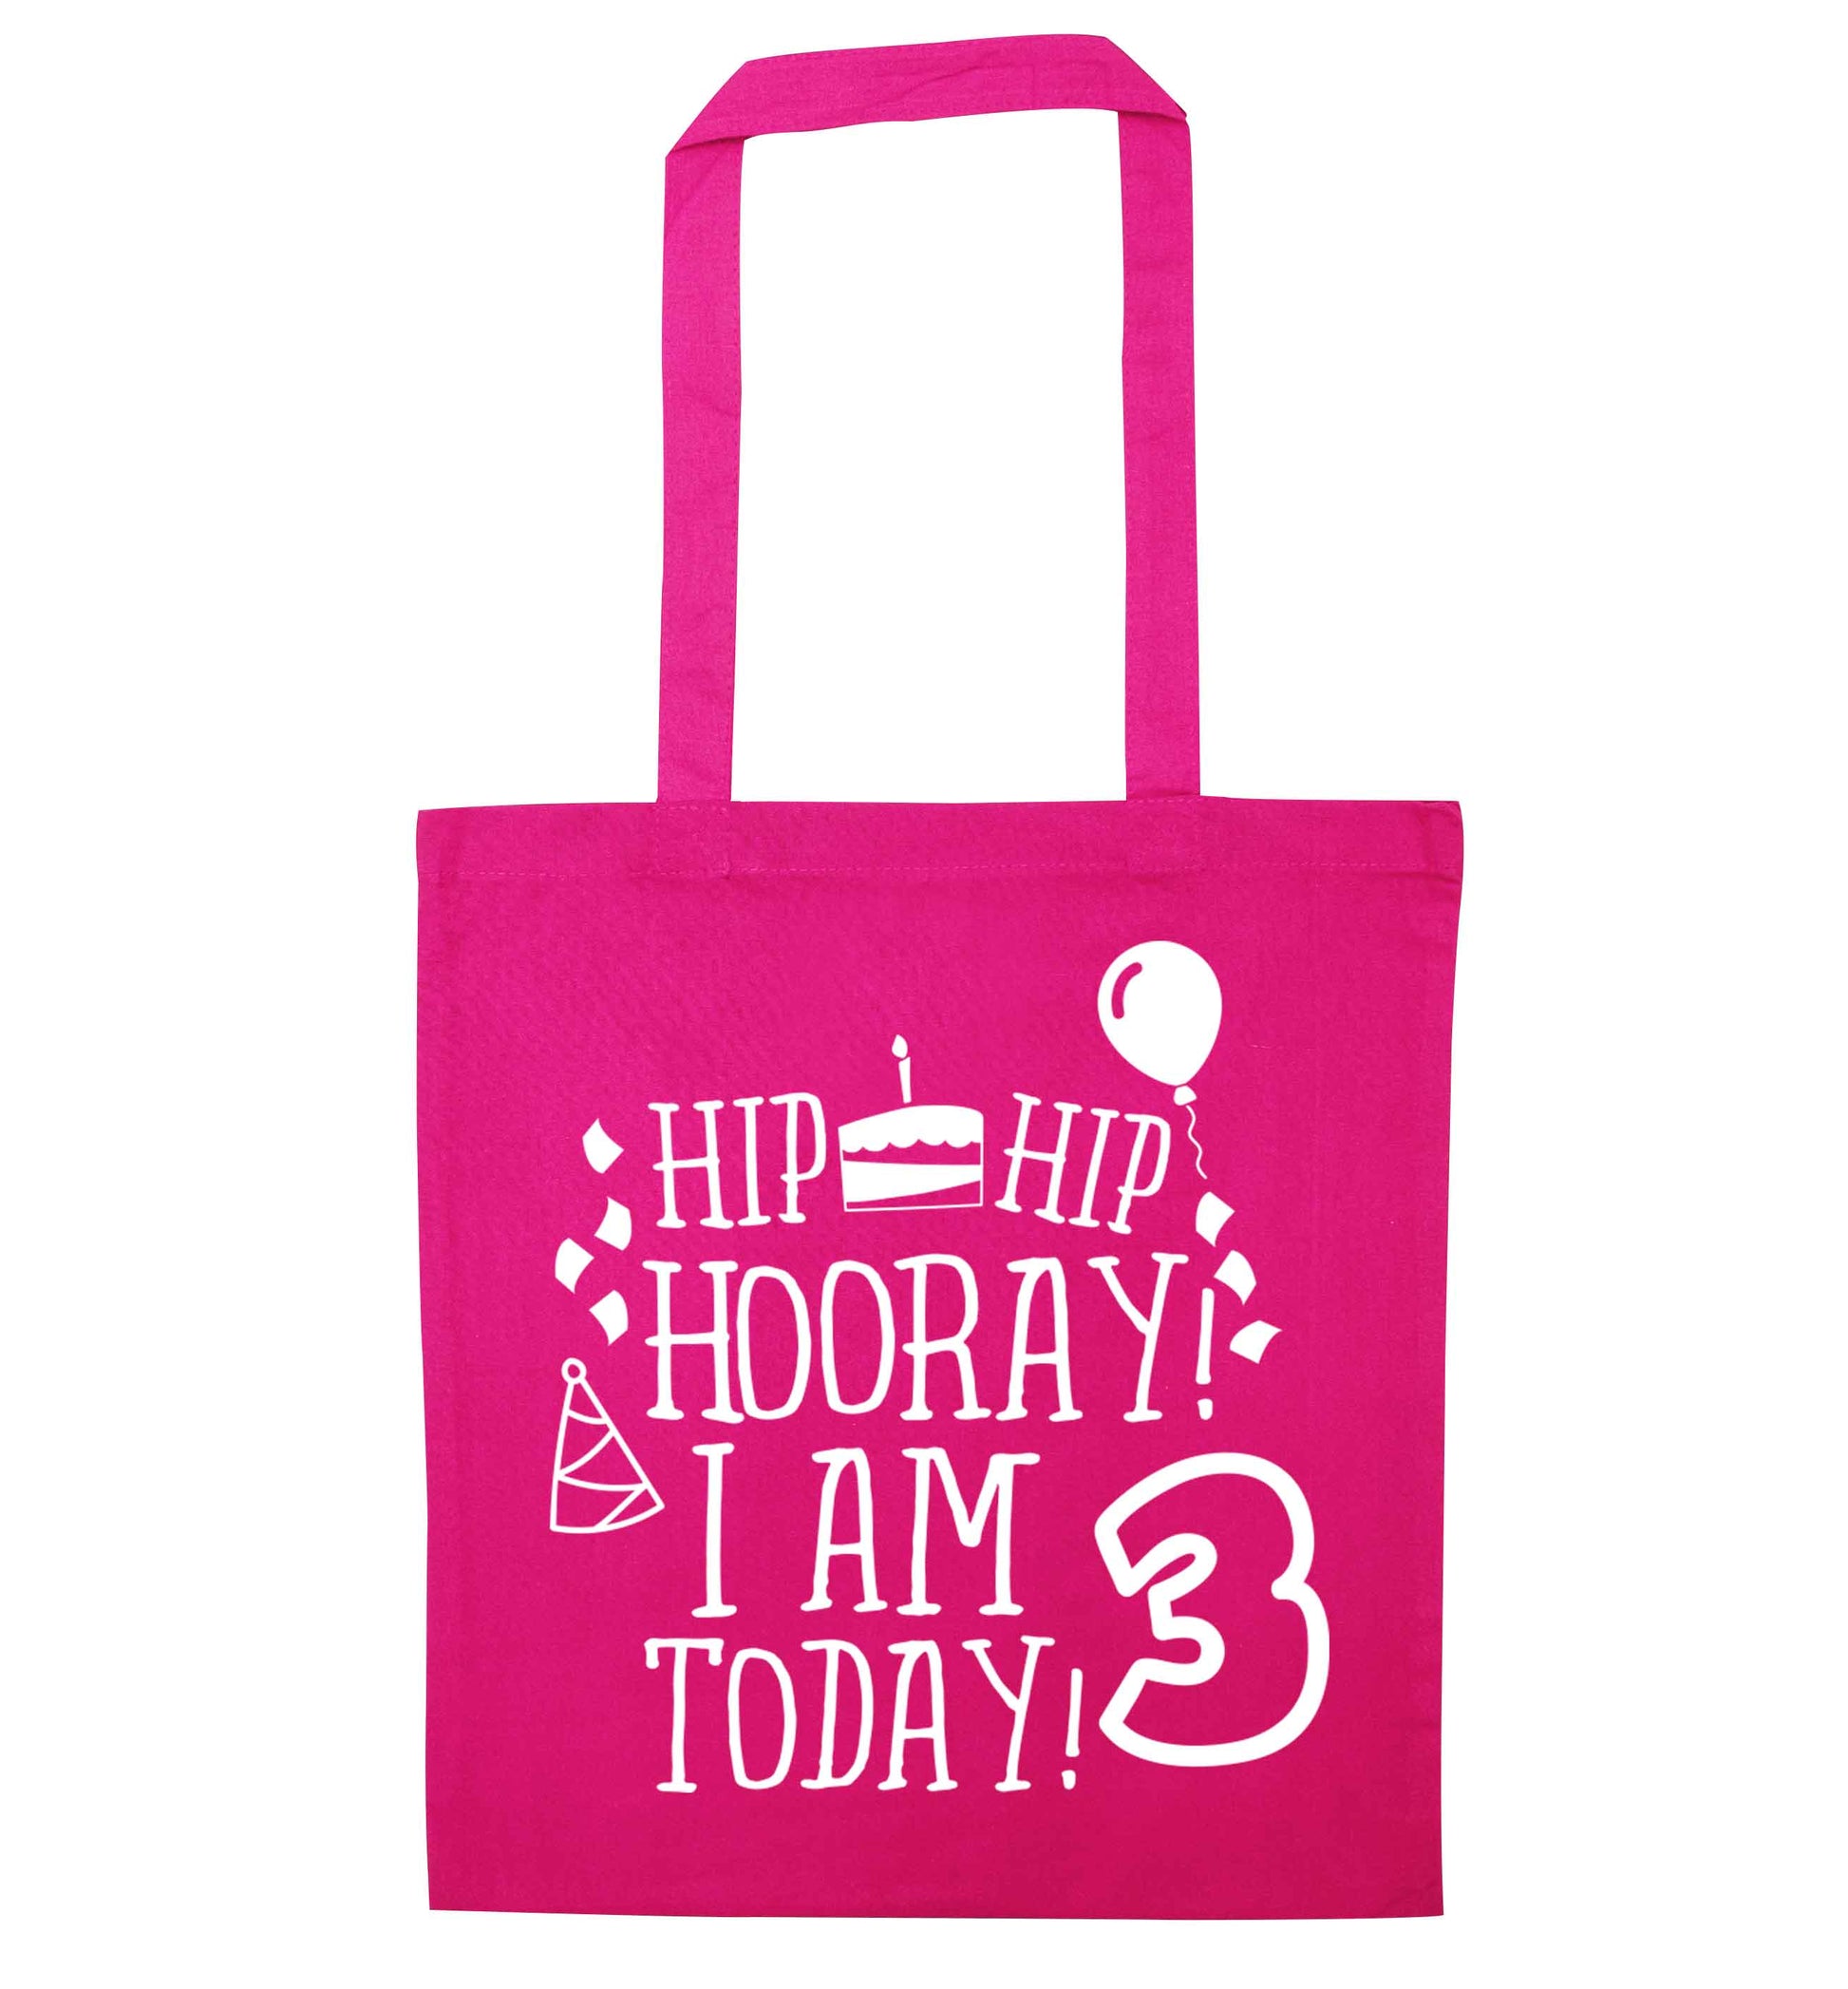 Hip hip hooray I'm 3 today! pink tote bag